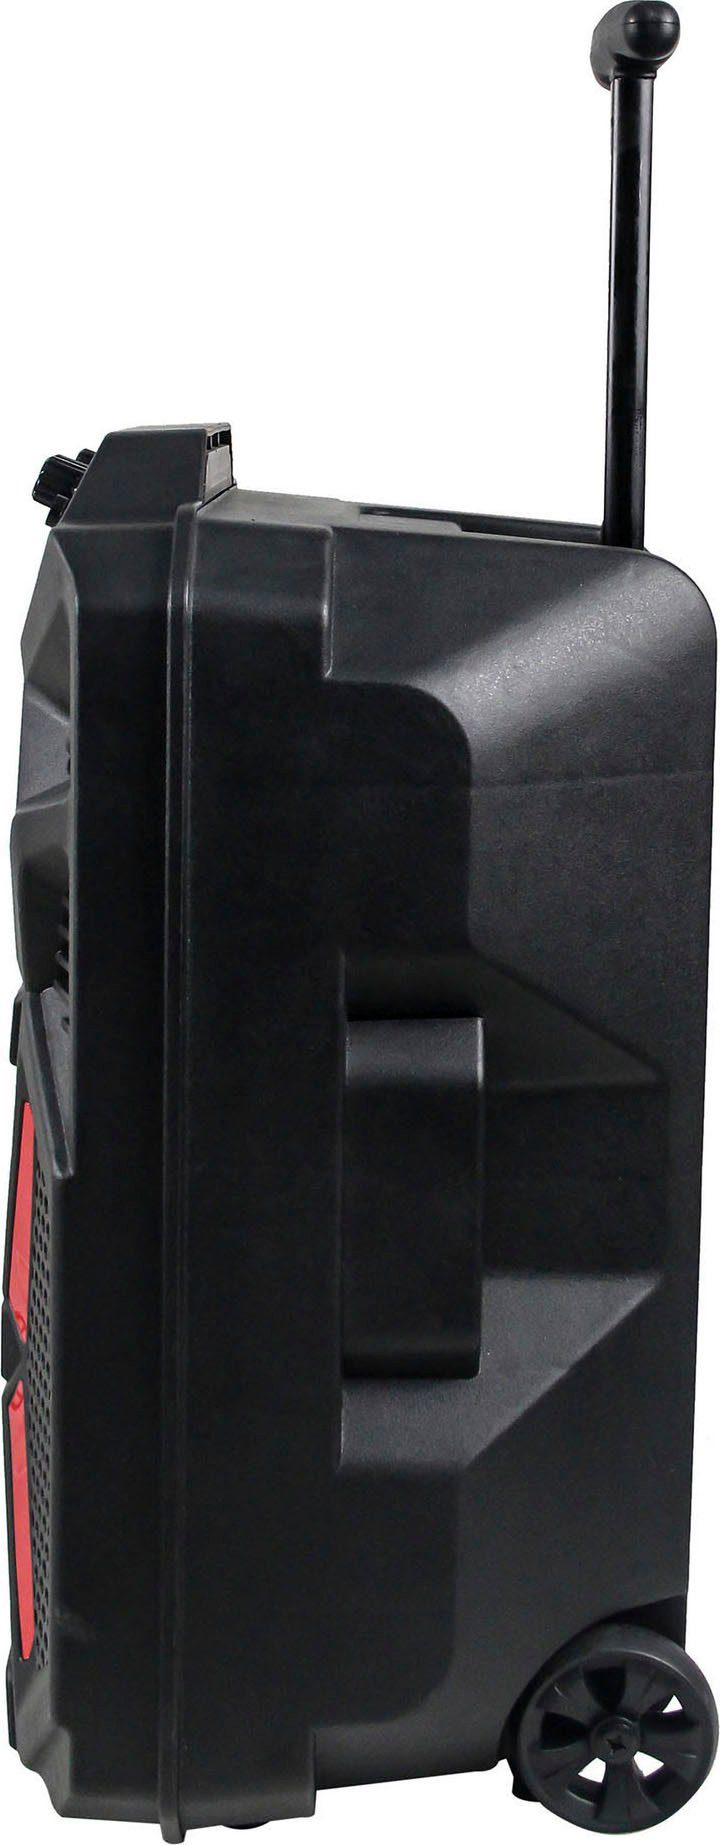 Portable-Lautsprecher (Bluetooth, TSP-120 Denver W) 8